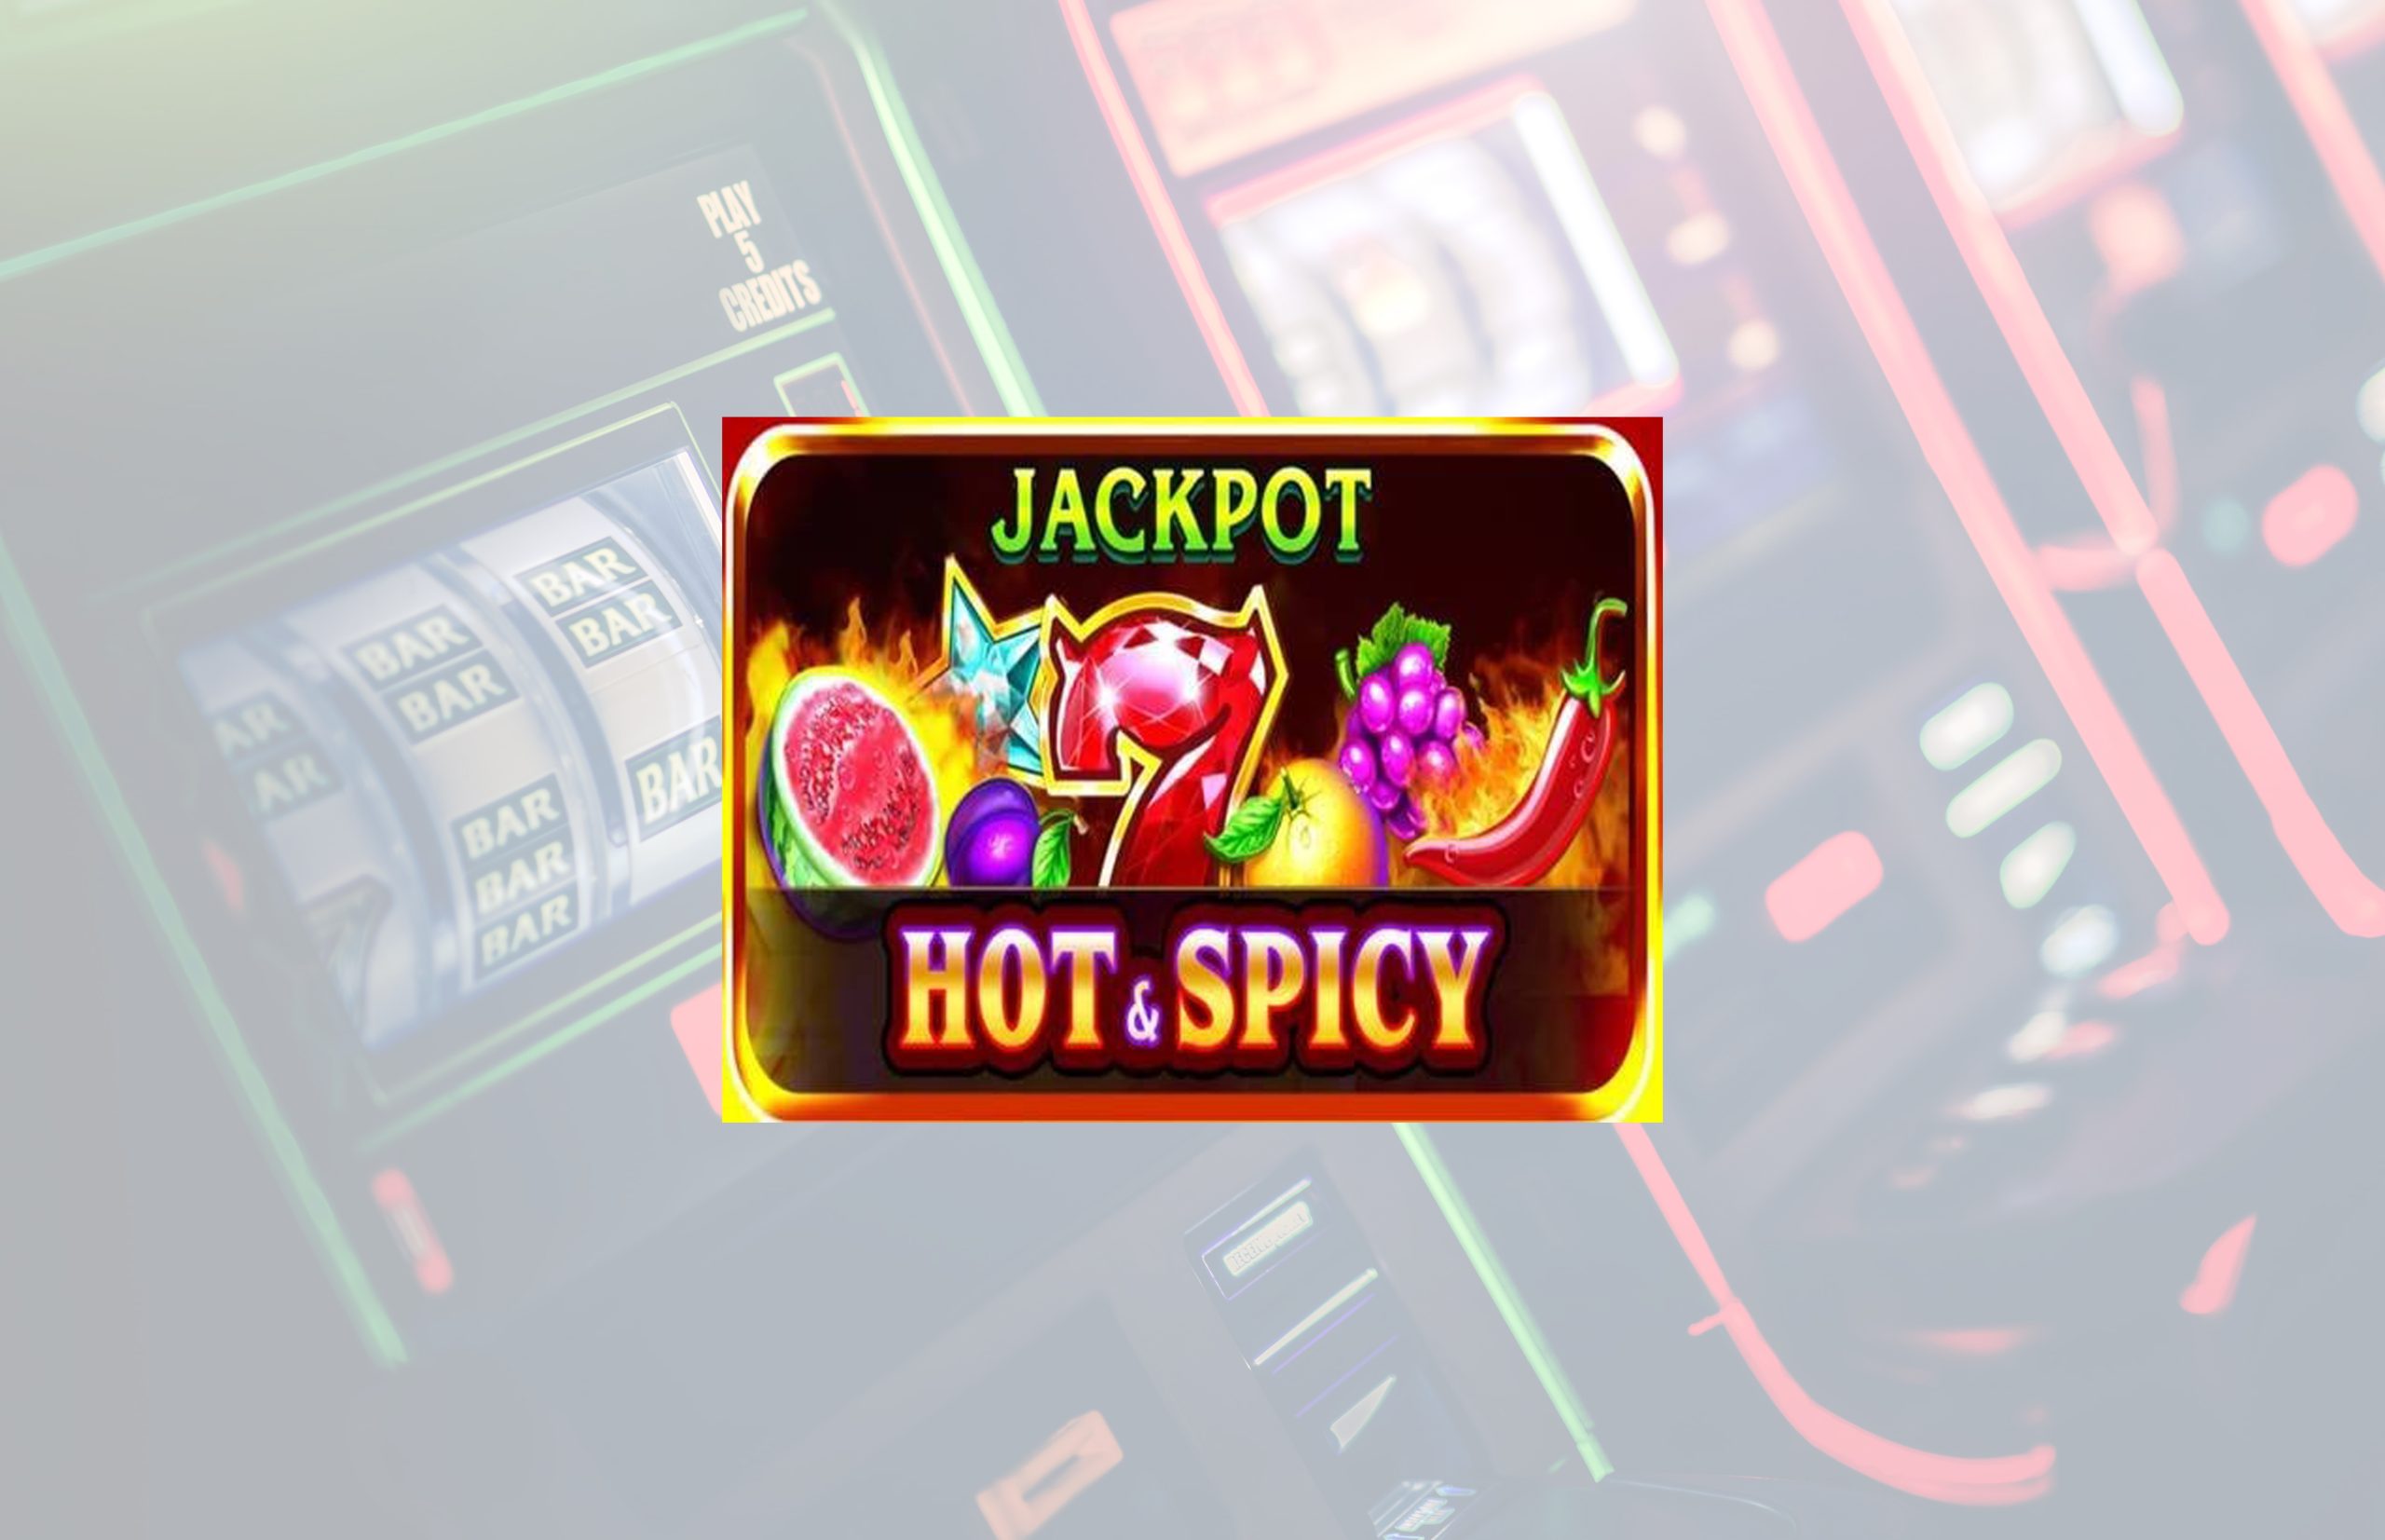 Hot & Spicy Jackpots Casinos Not on Gamstop